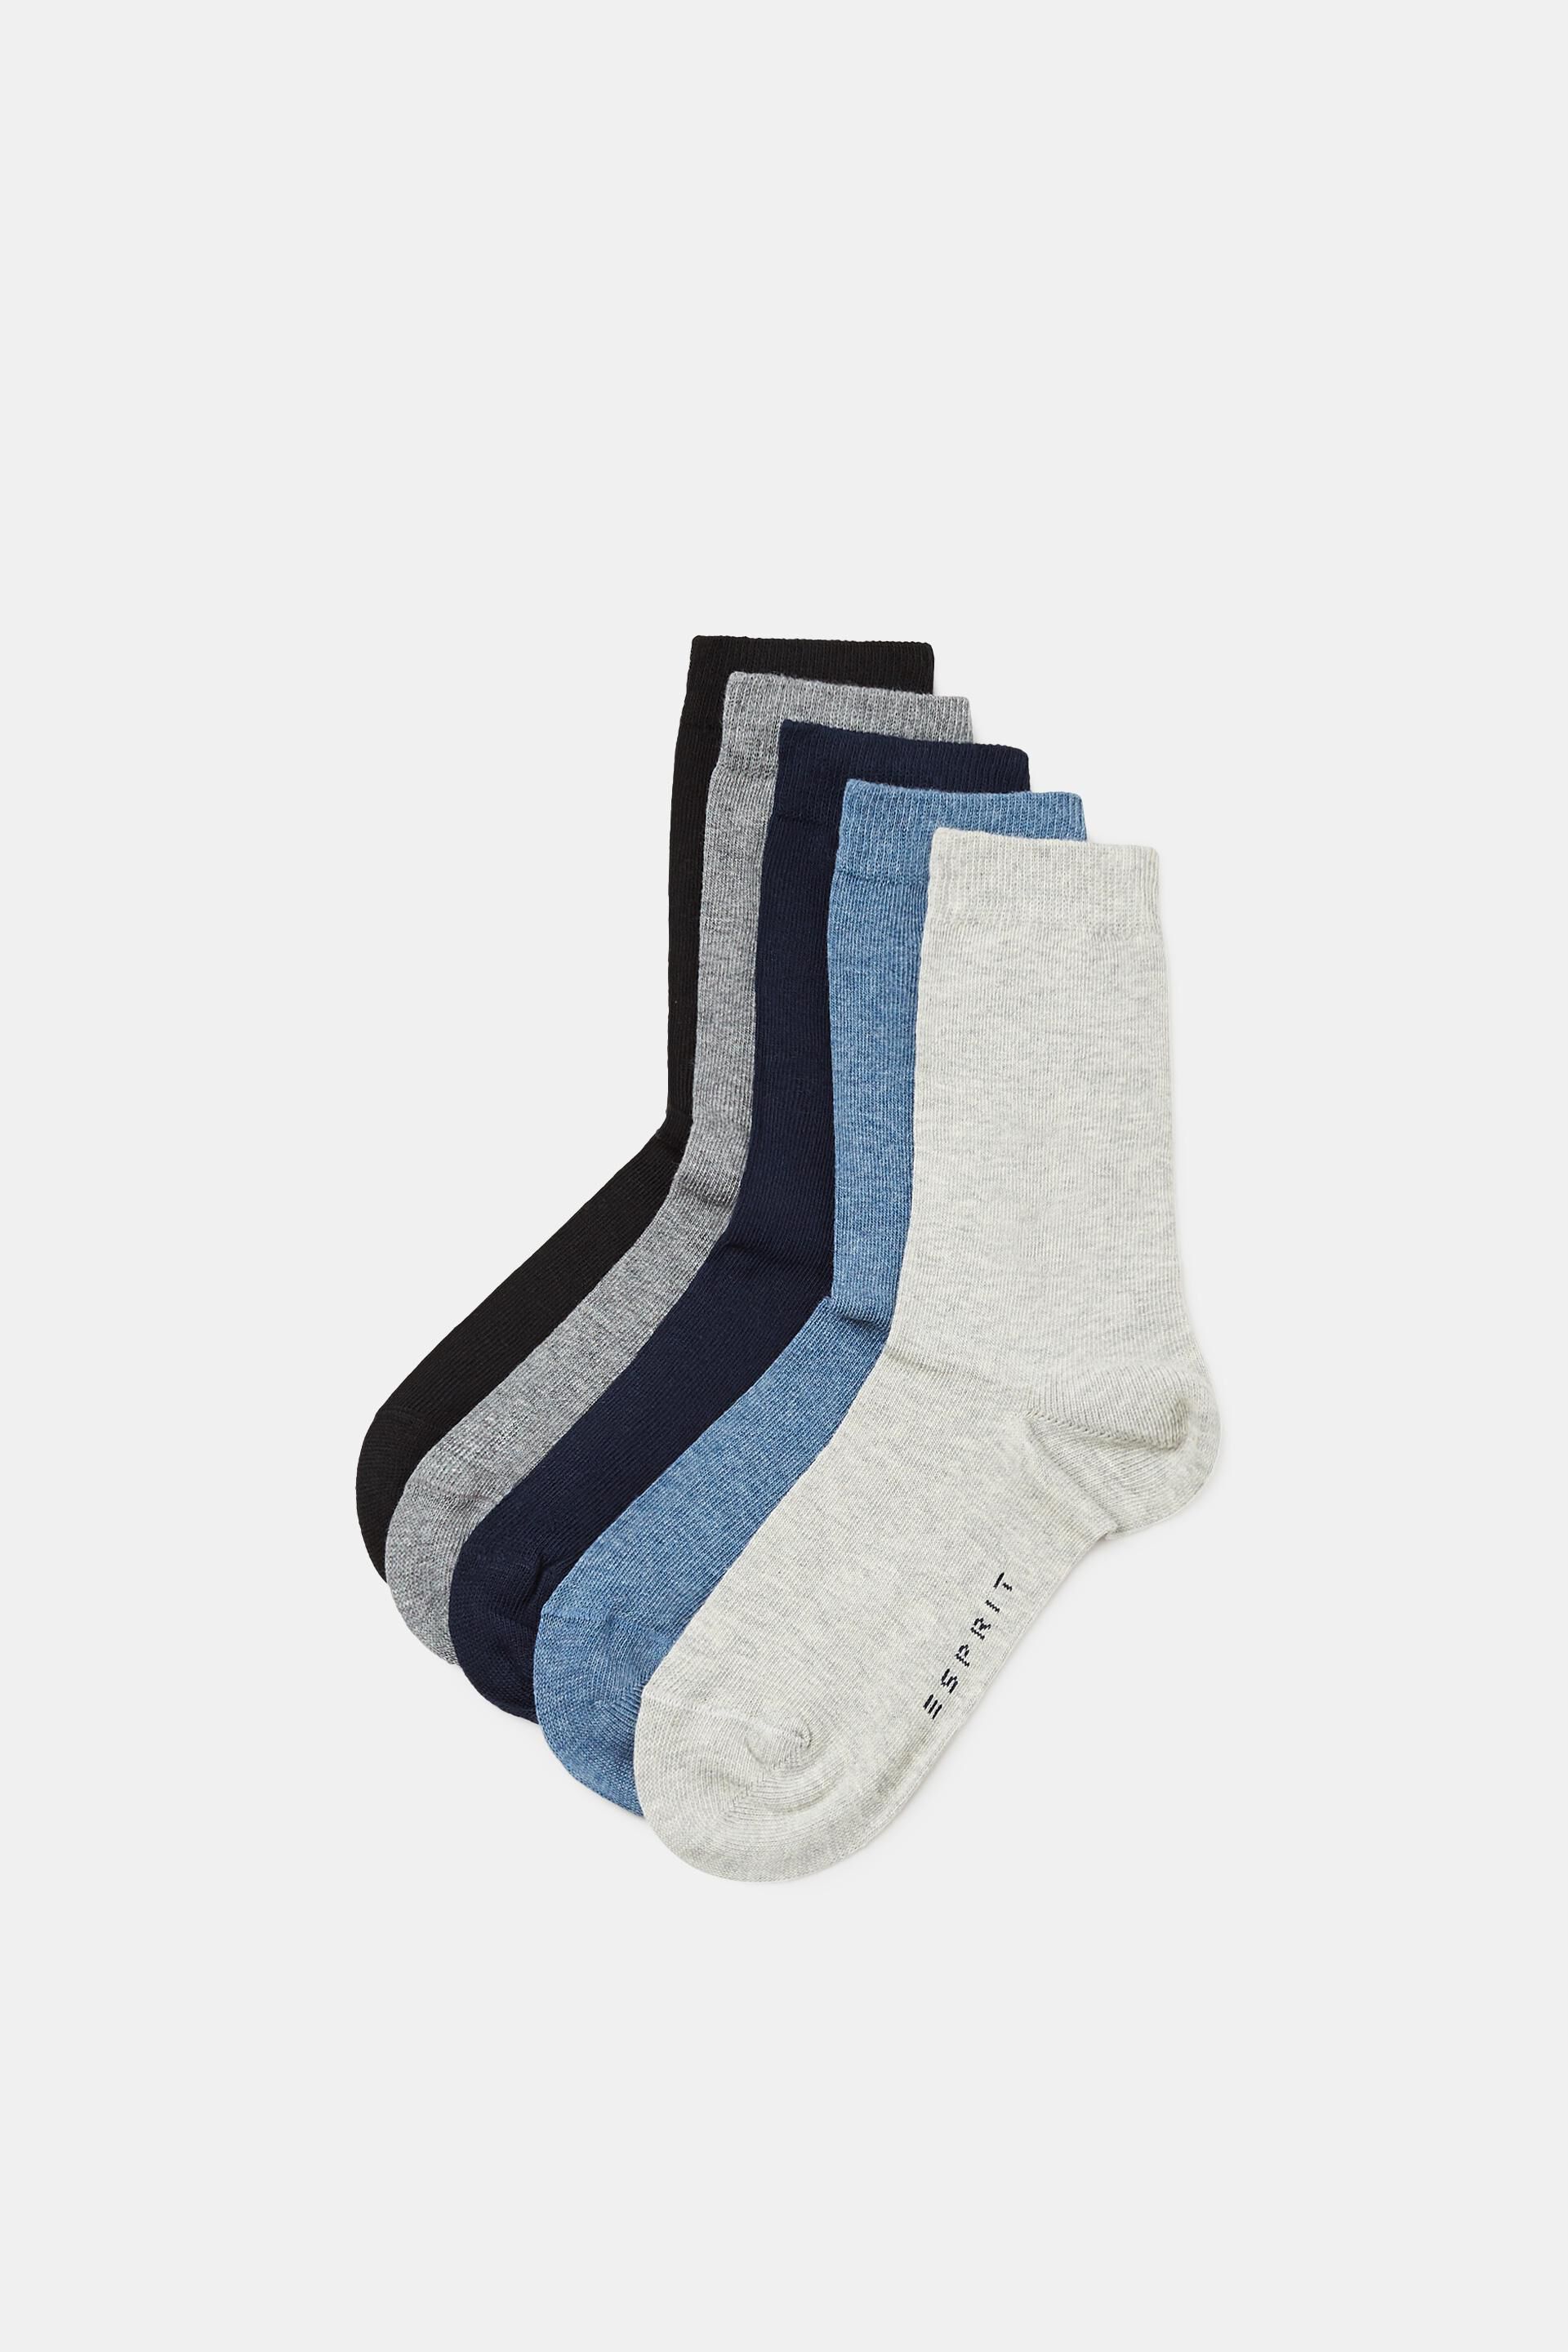 Esprit plain-coloured pack Five socks of